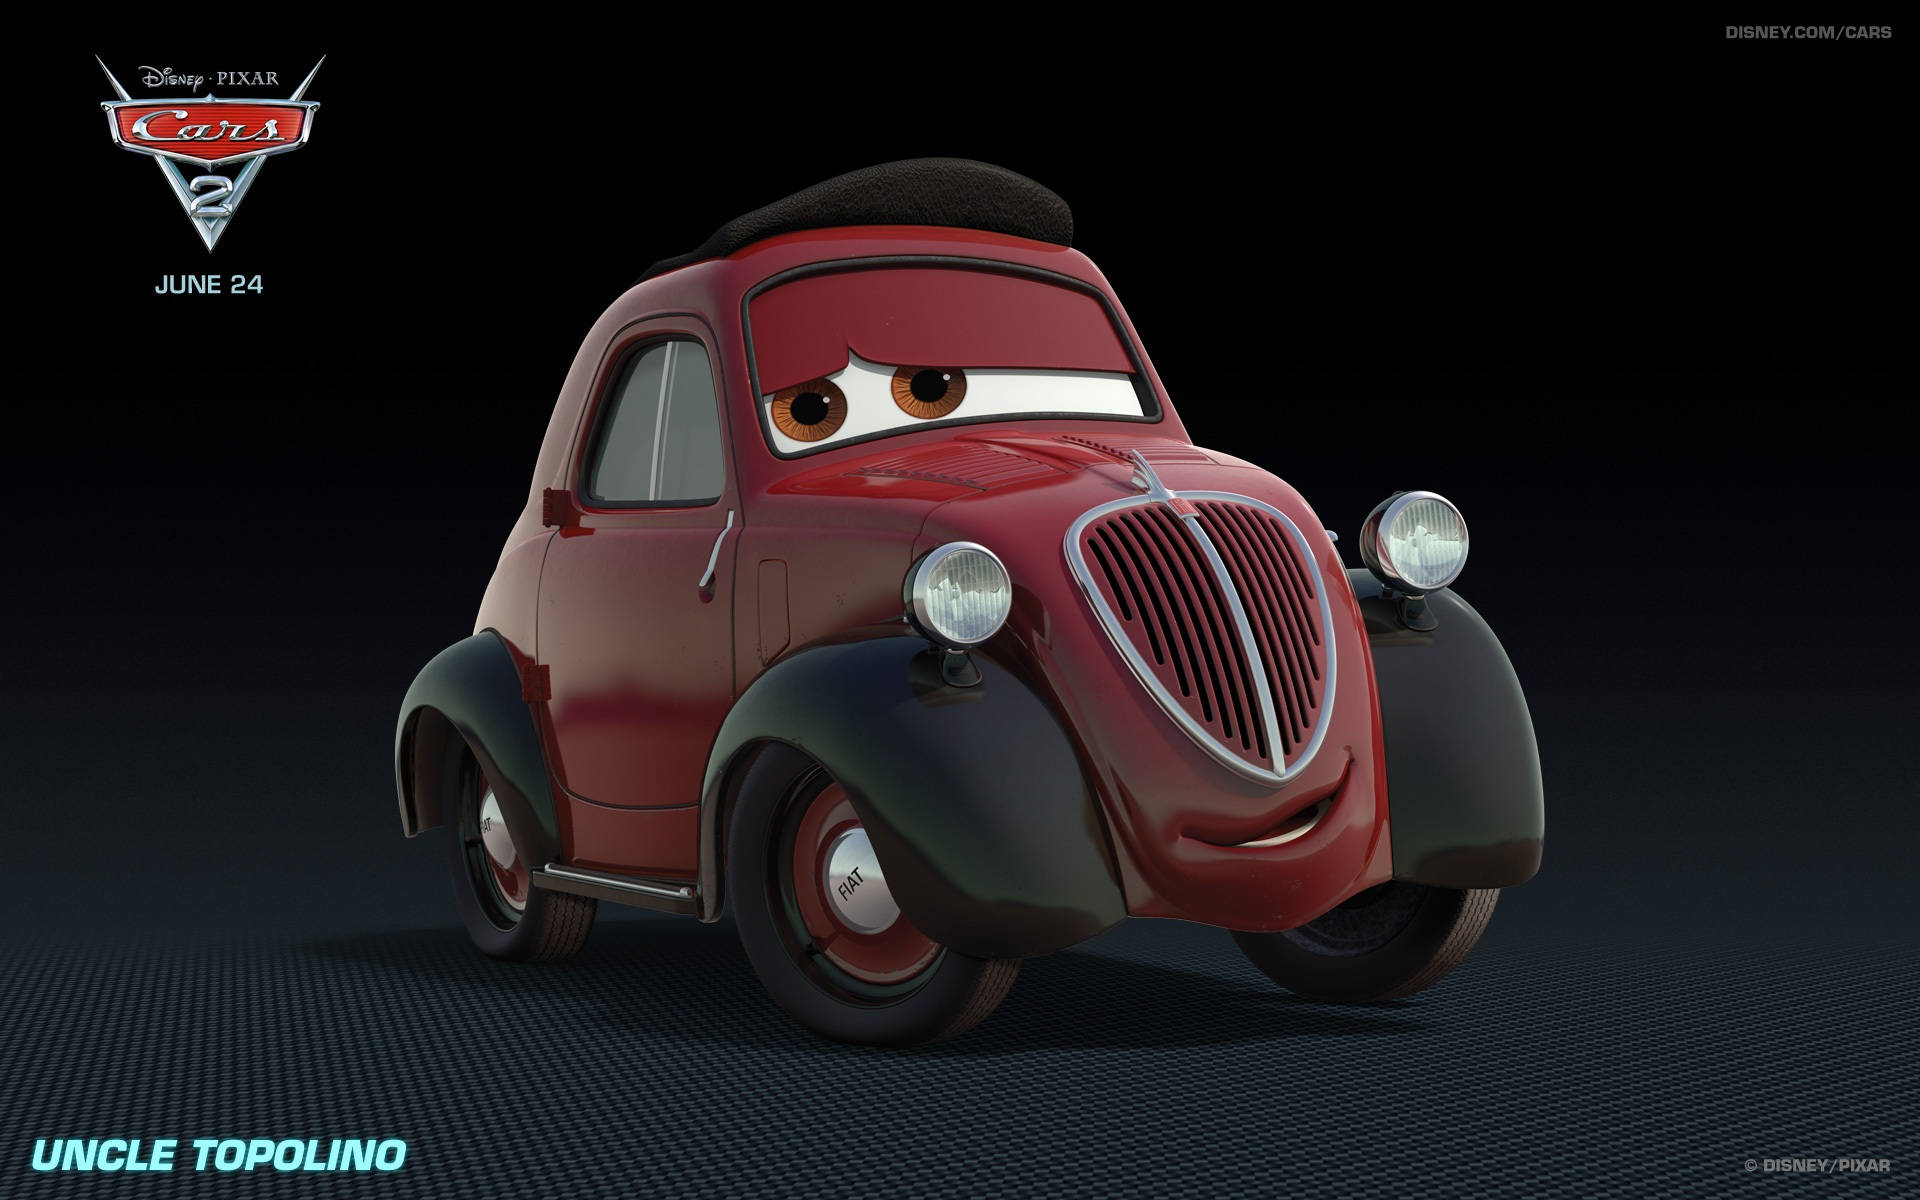 Disney Pixar Uncle Topolino Cars 2 Background